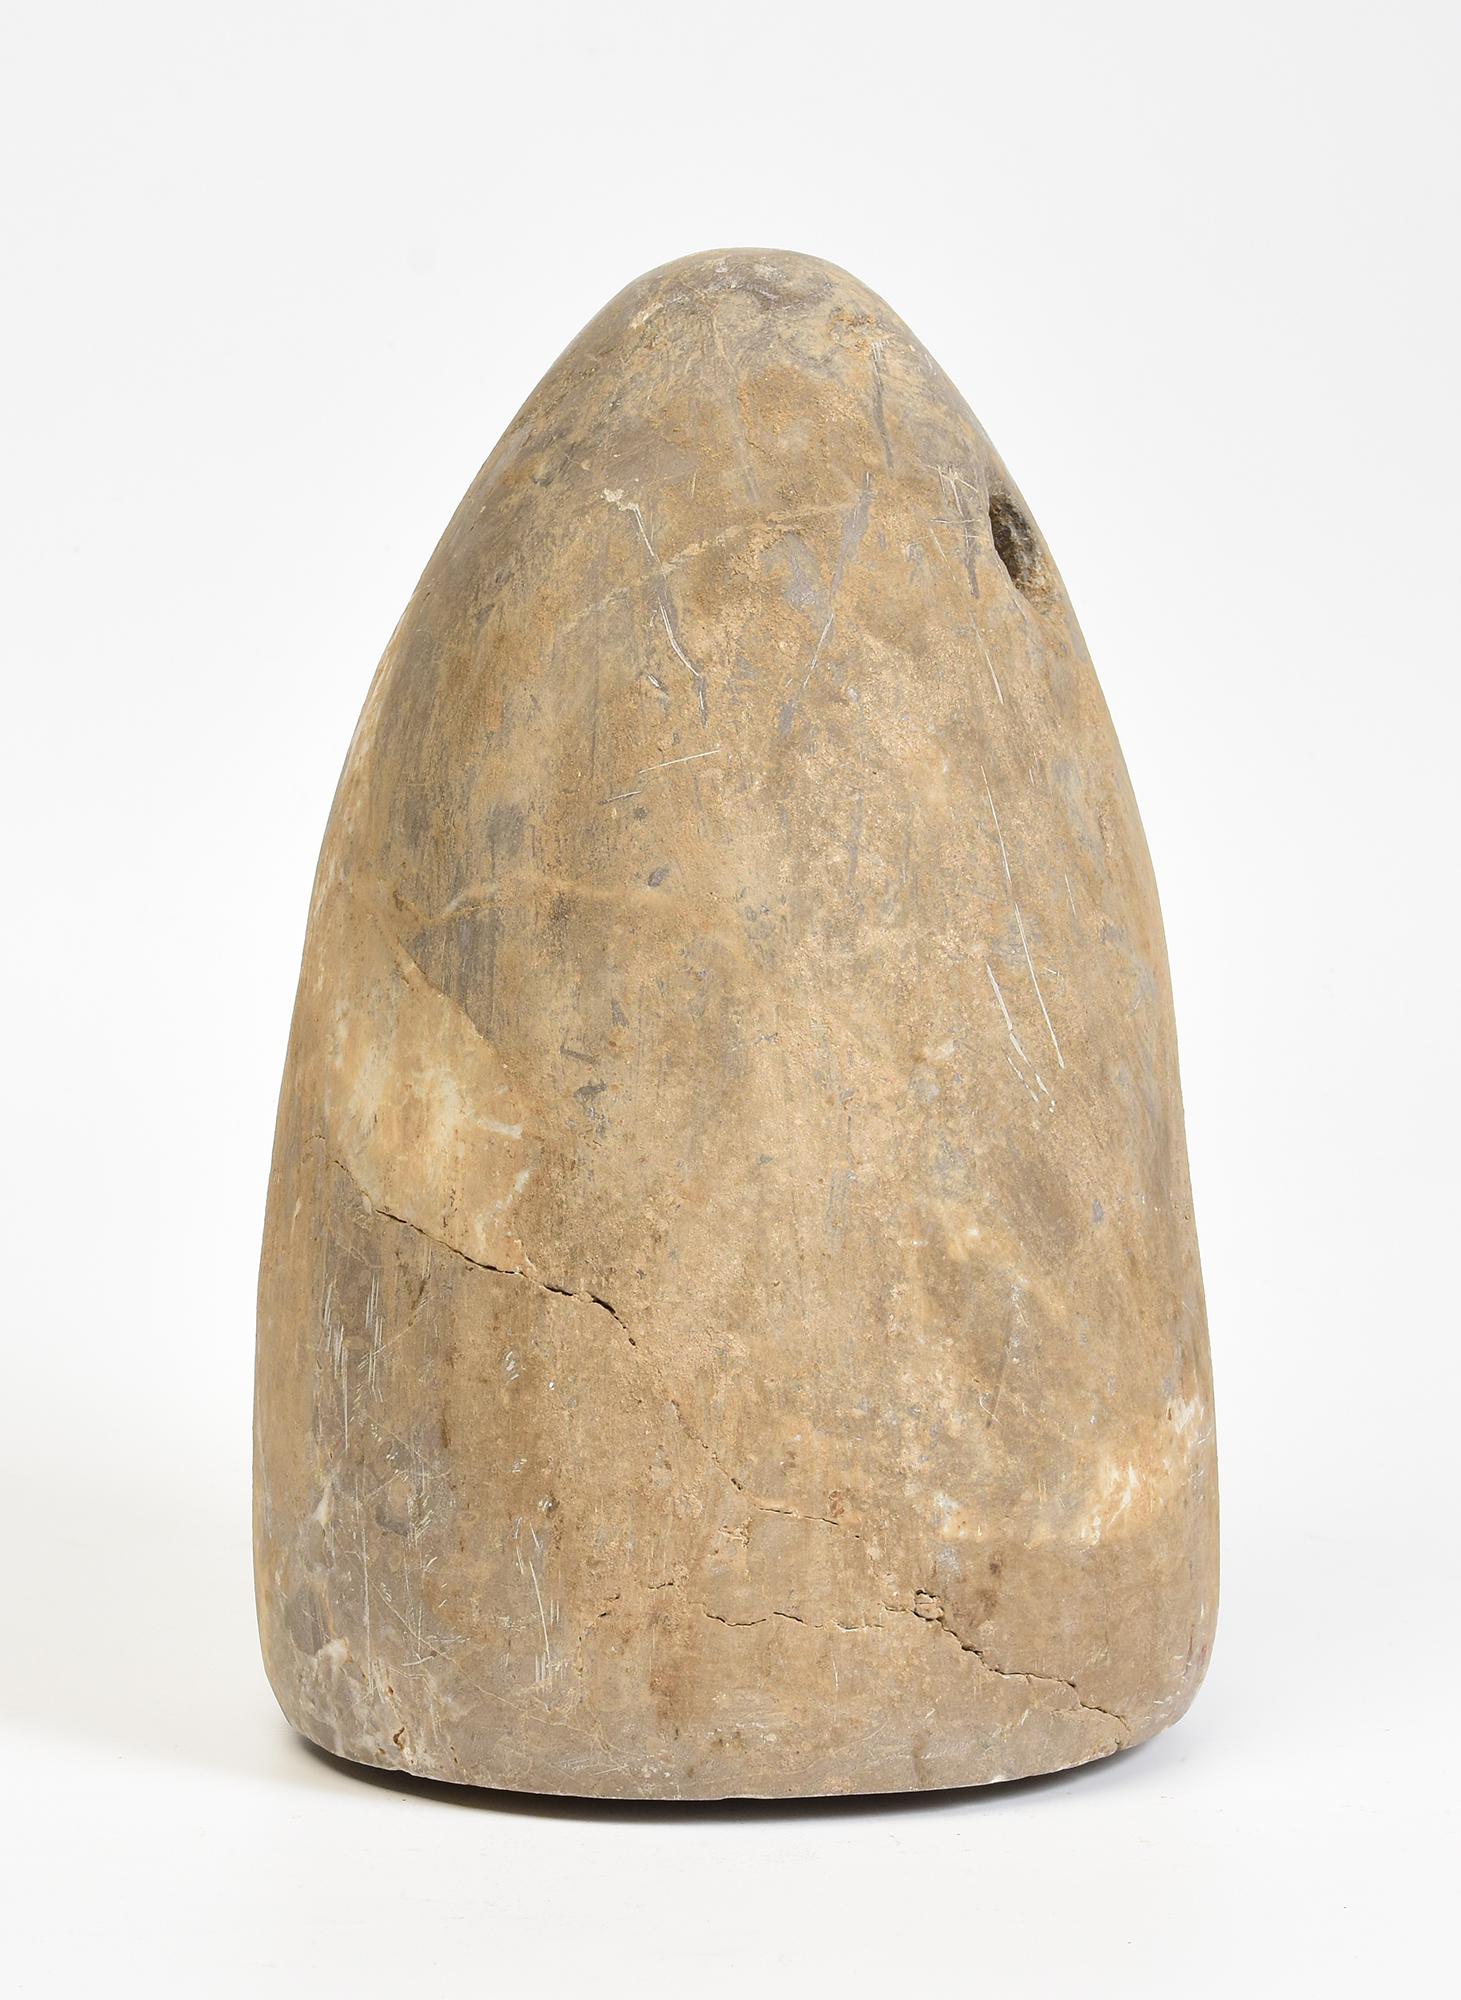 2-3 B.C., Afghanistan, Rare Bactrian Hardstone Weight 2